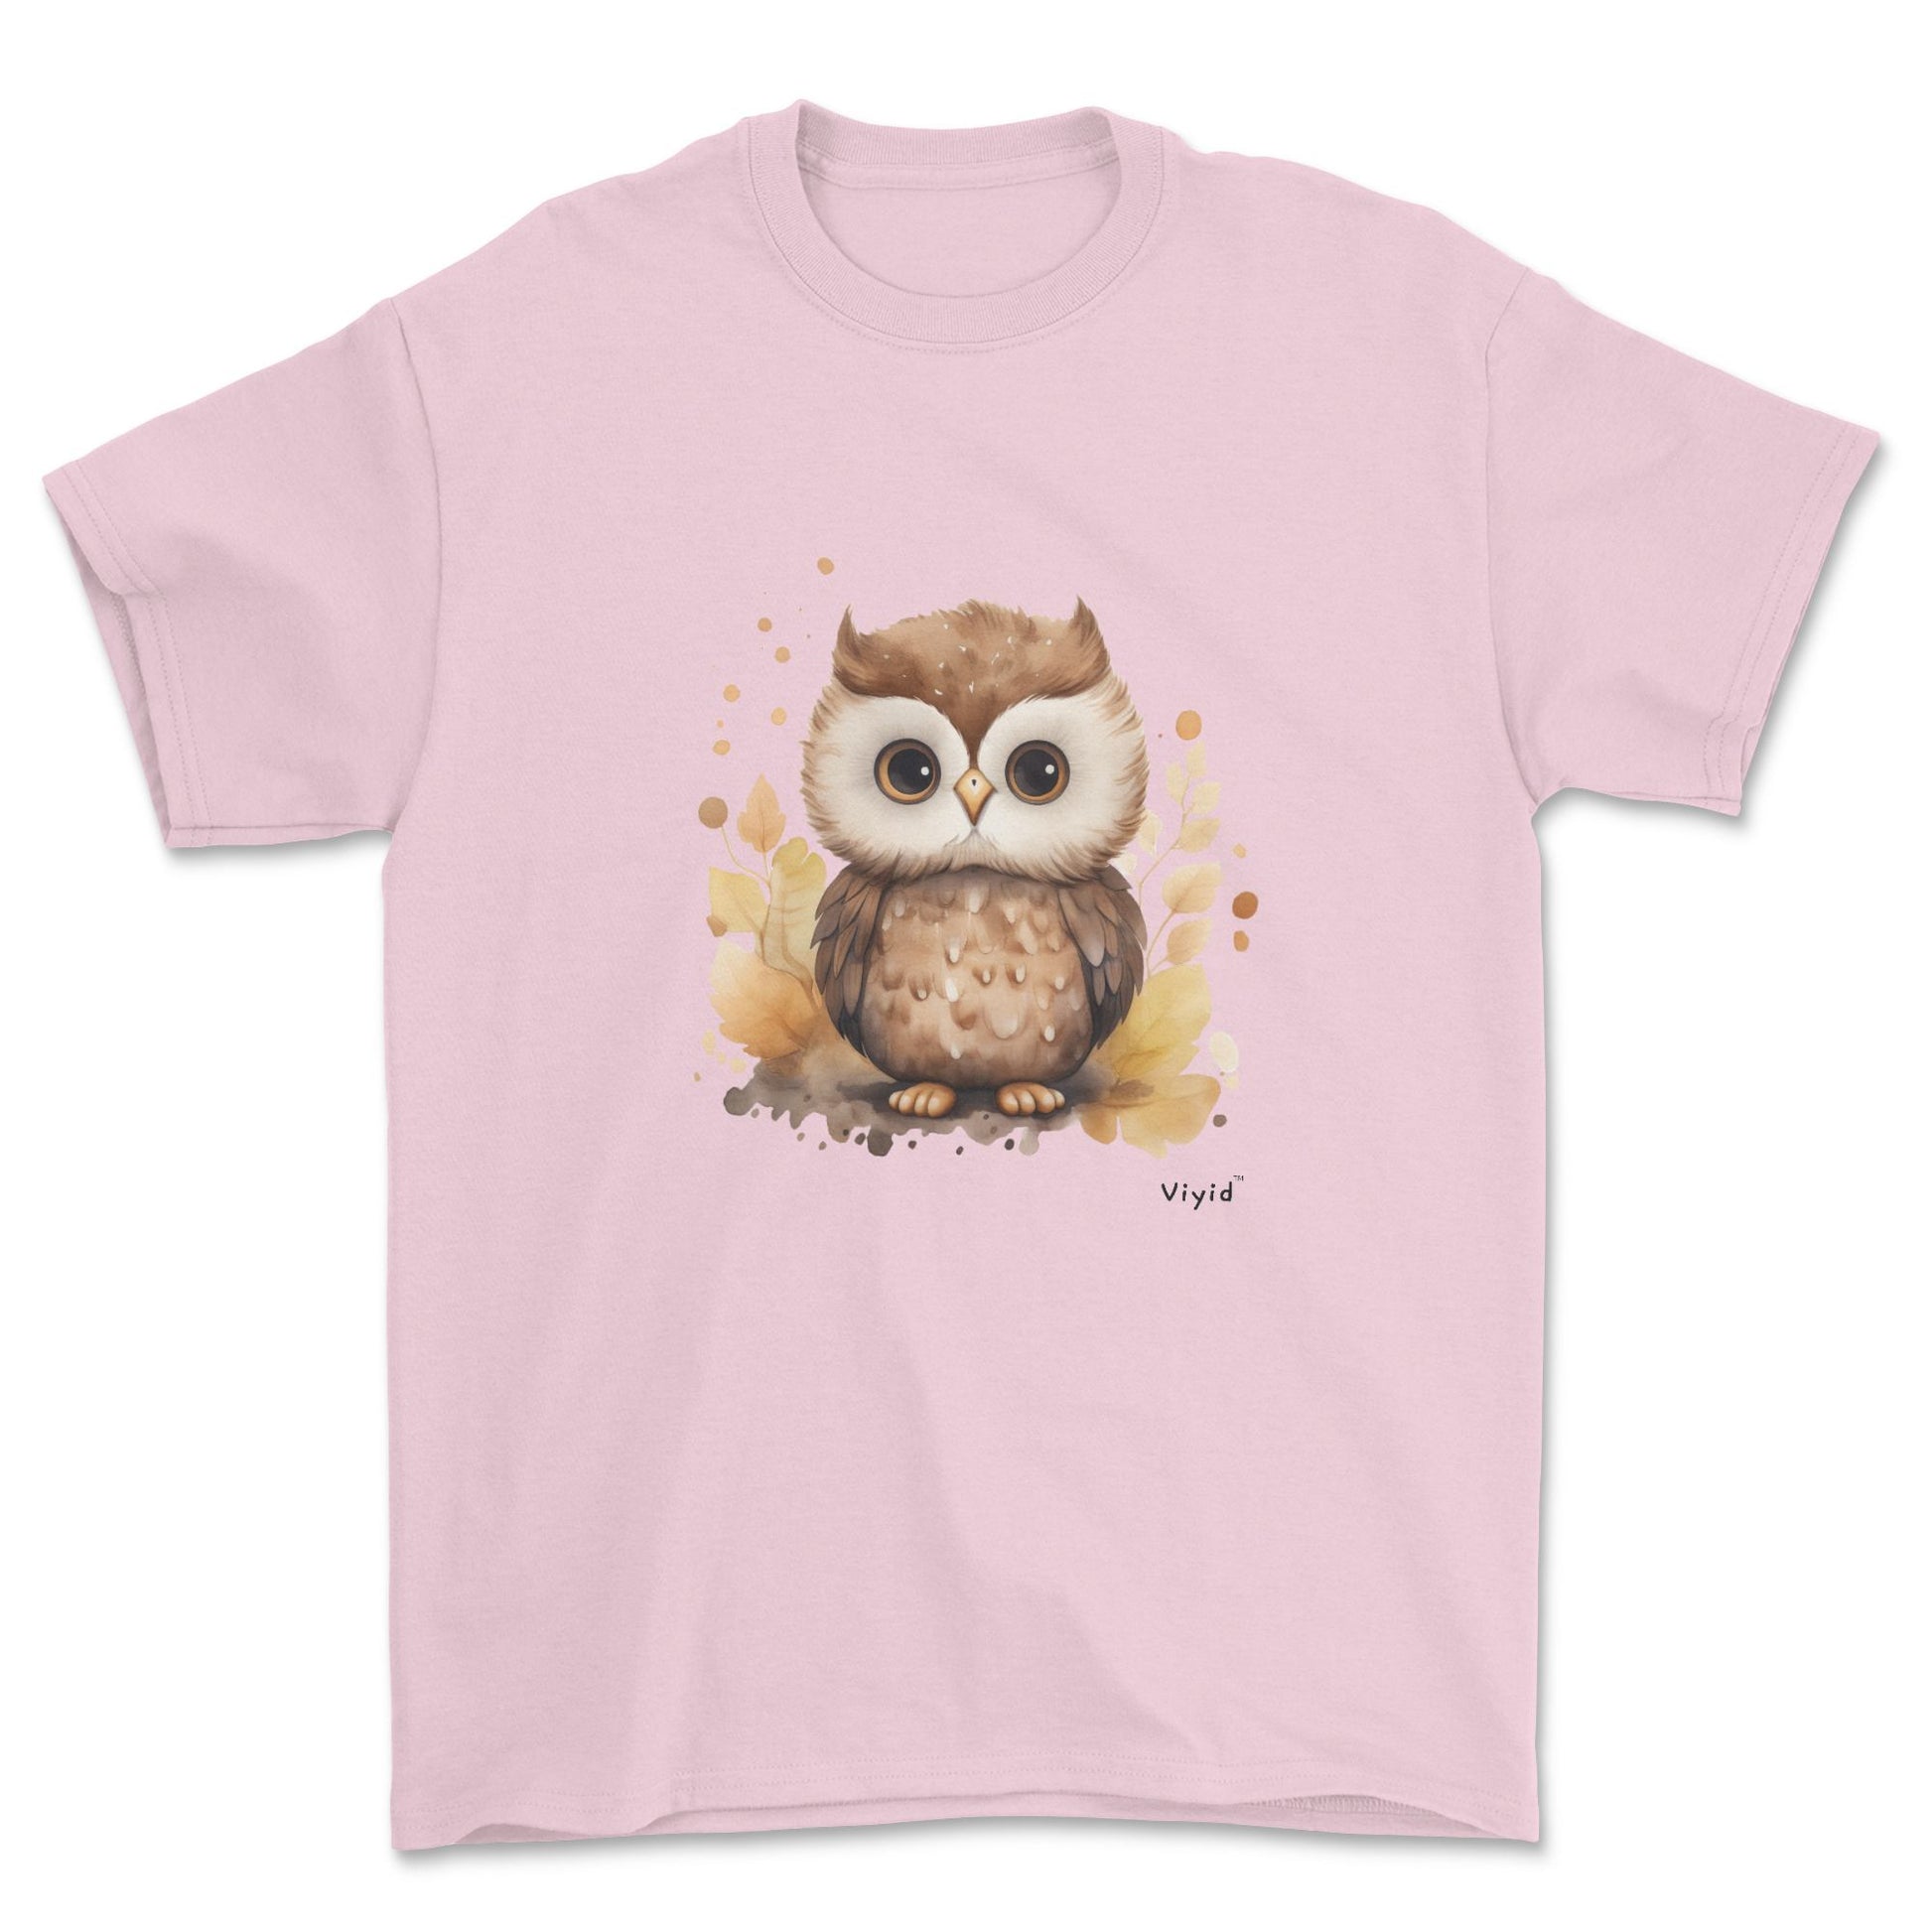 nocturnal owl adult t-shirt light pink